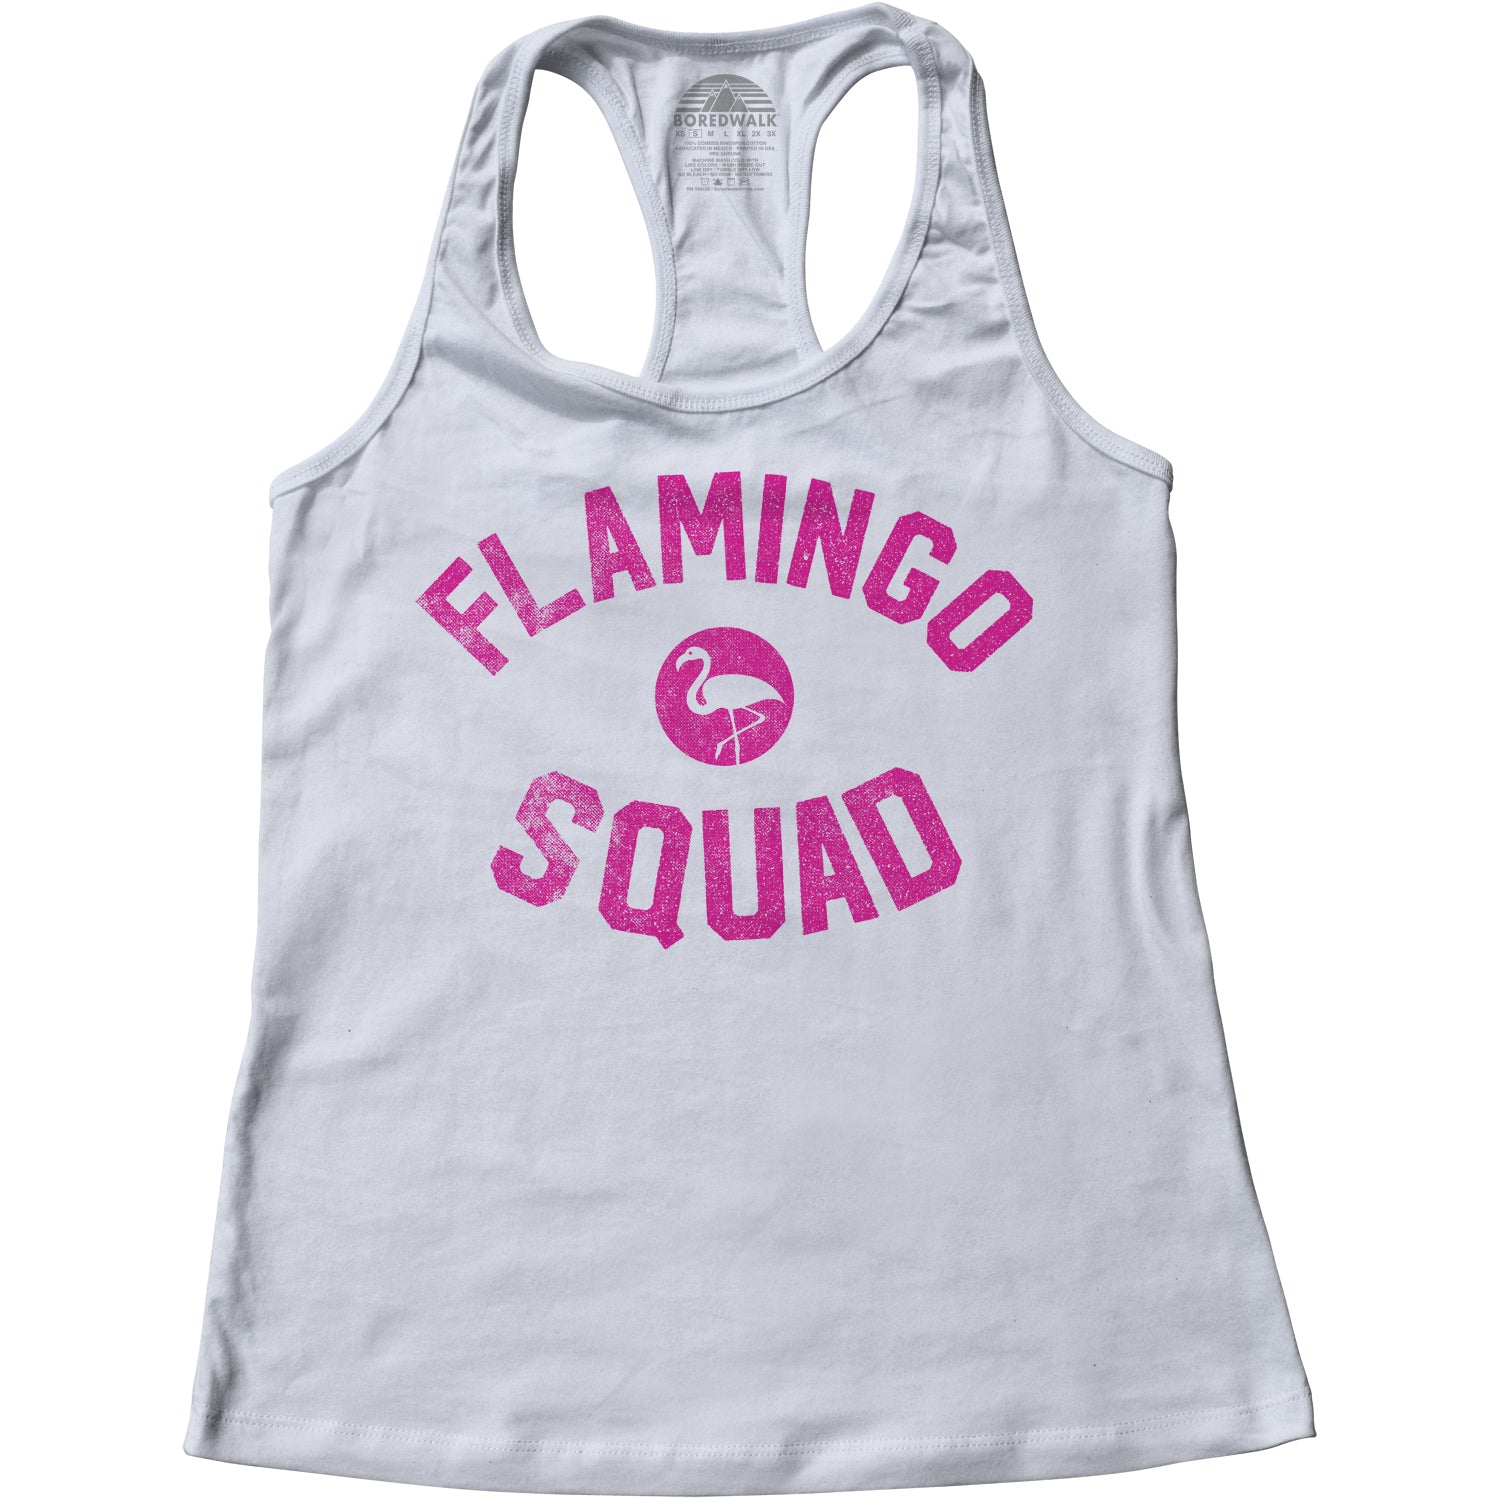 Women's Flamingo Squad Racerback Tank Top